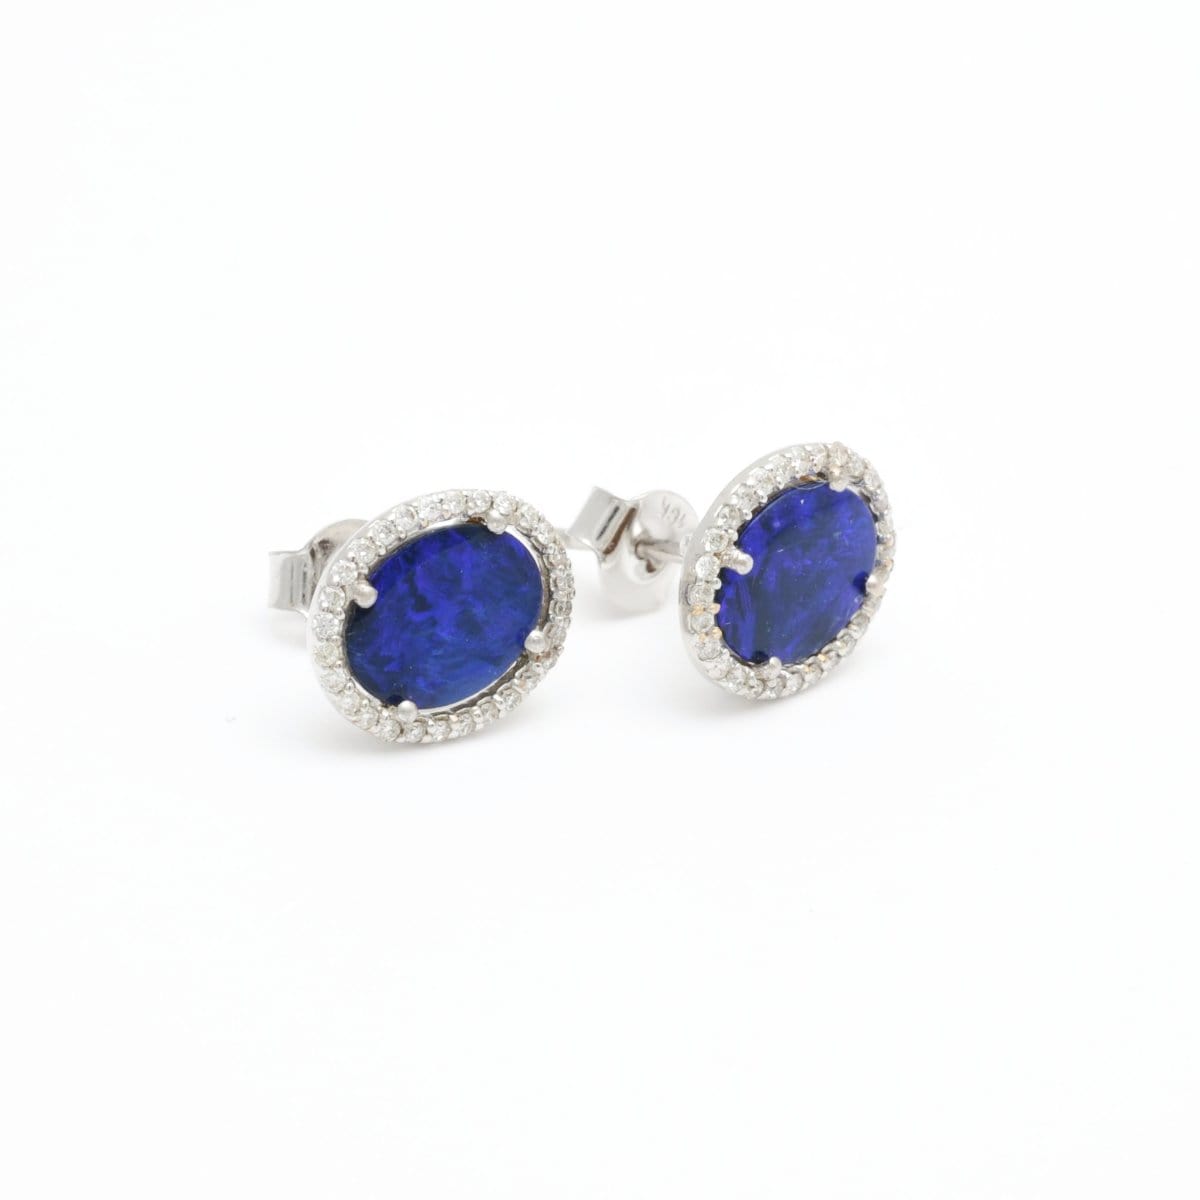 Diamond halo around blue boulder opal